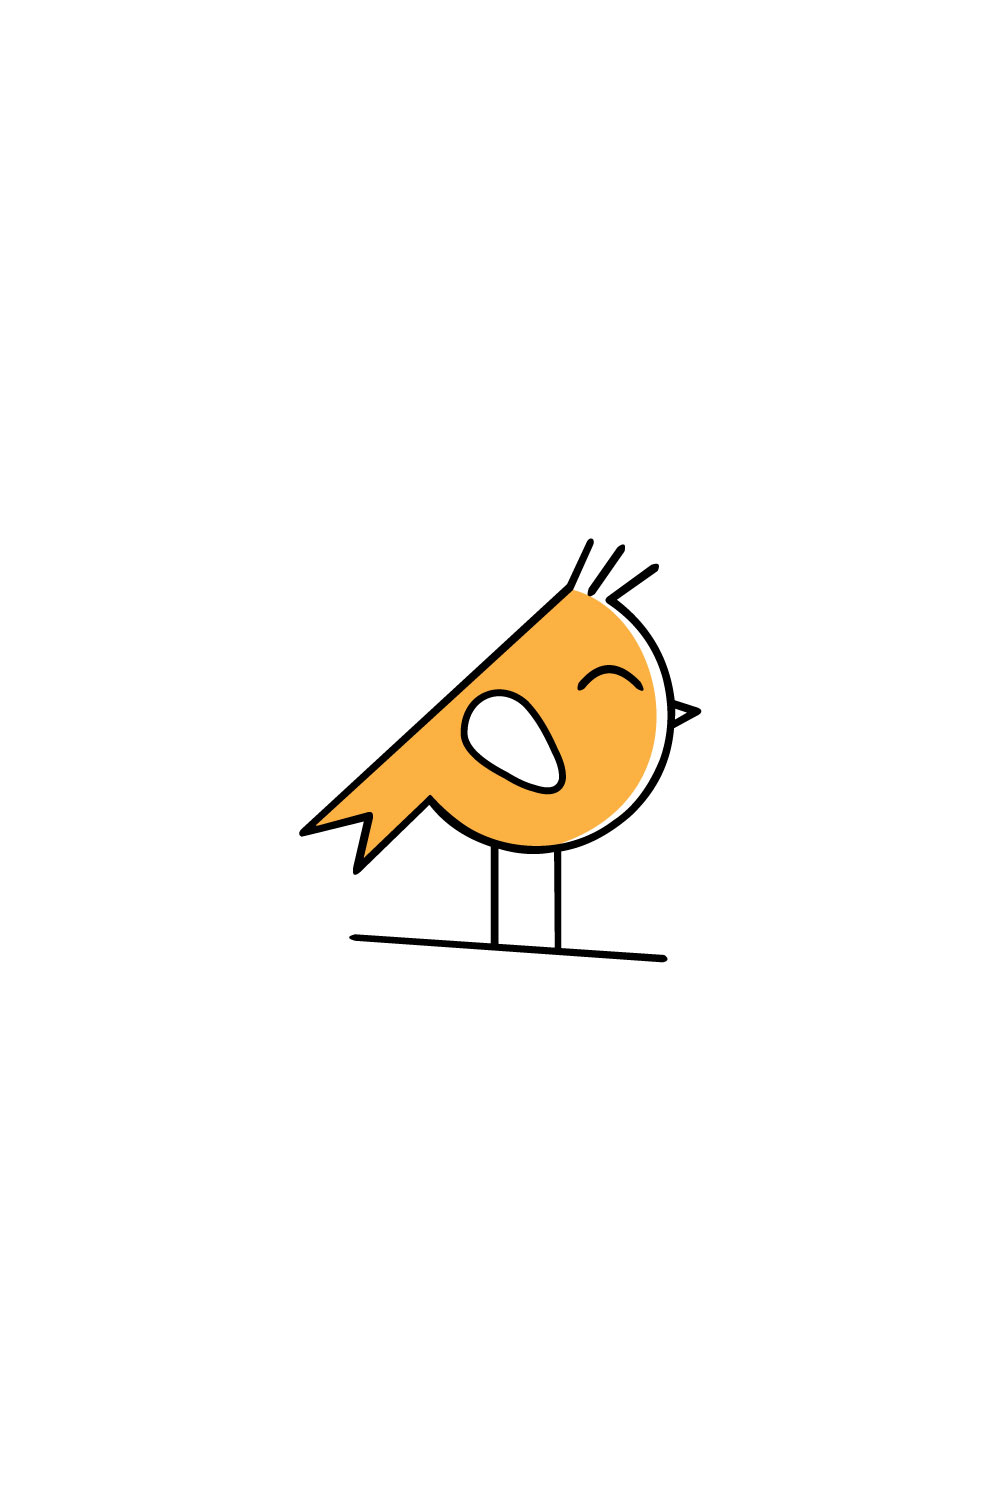 Chicks Animal Logo Vector pinterest image.